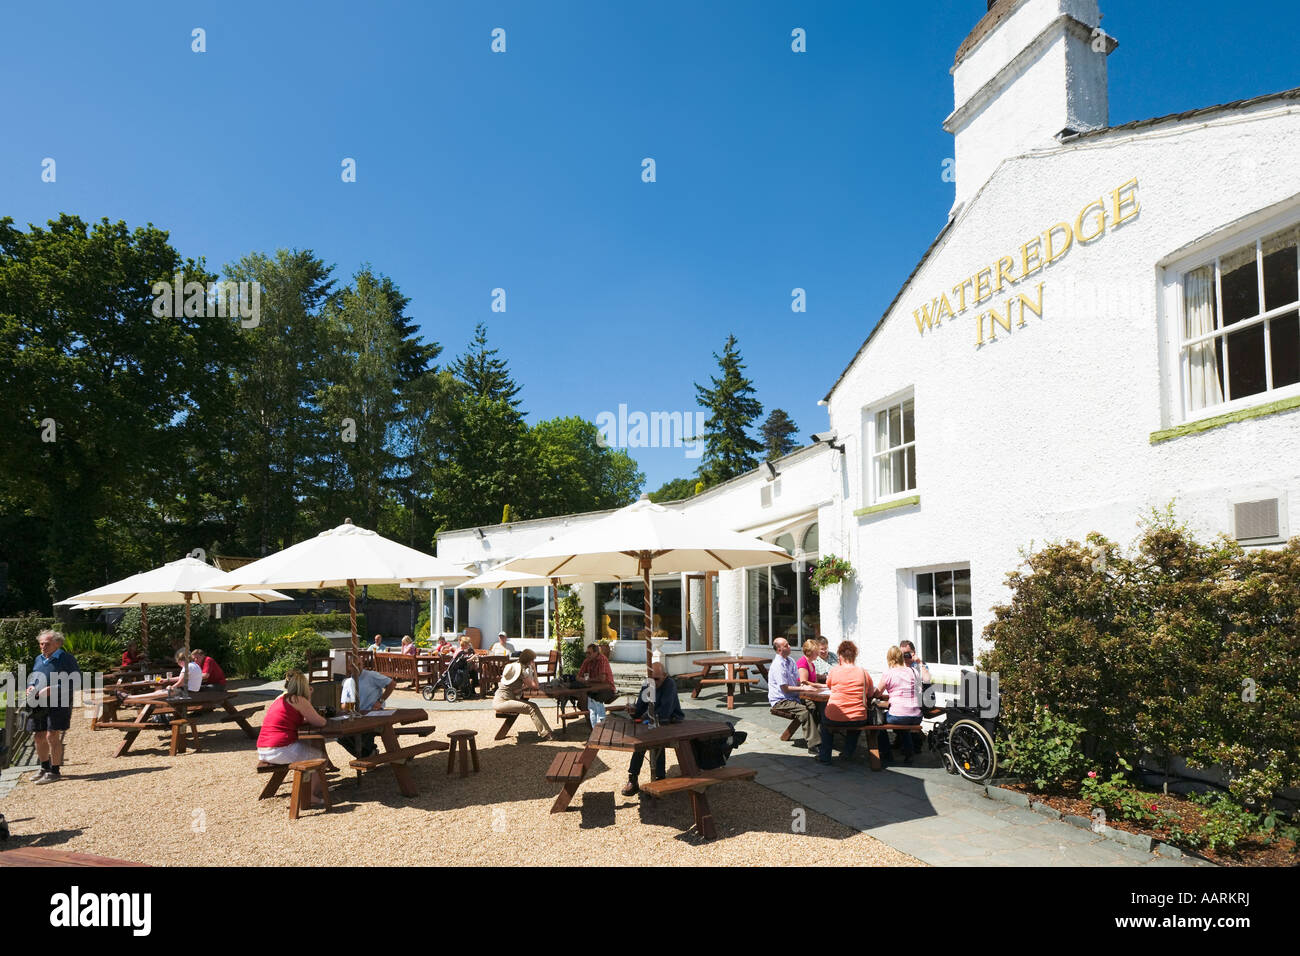 Wateredge Inn, Waterhead Bay, Ambleside, Lake Windermere, Lake District, Cumbria, England, UK Stock Photo